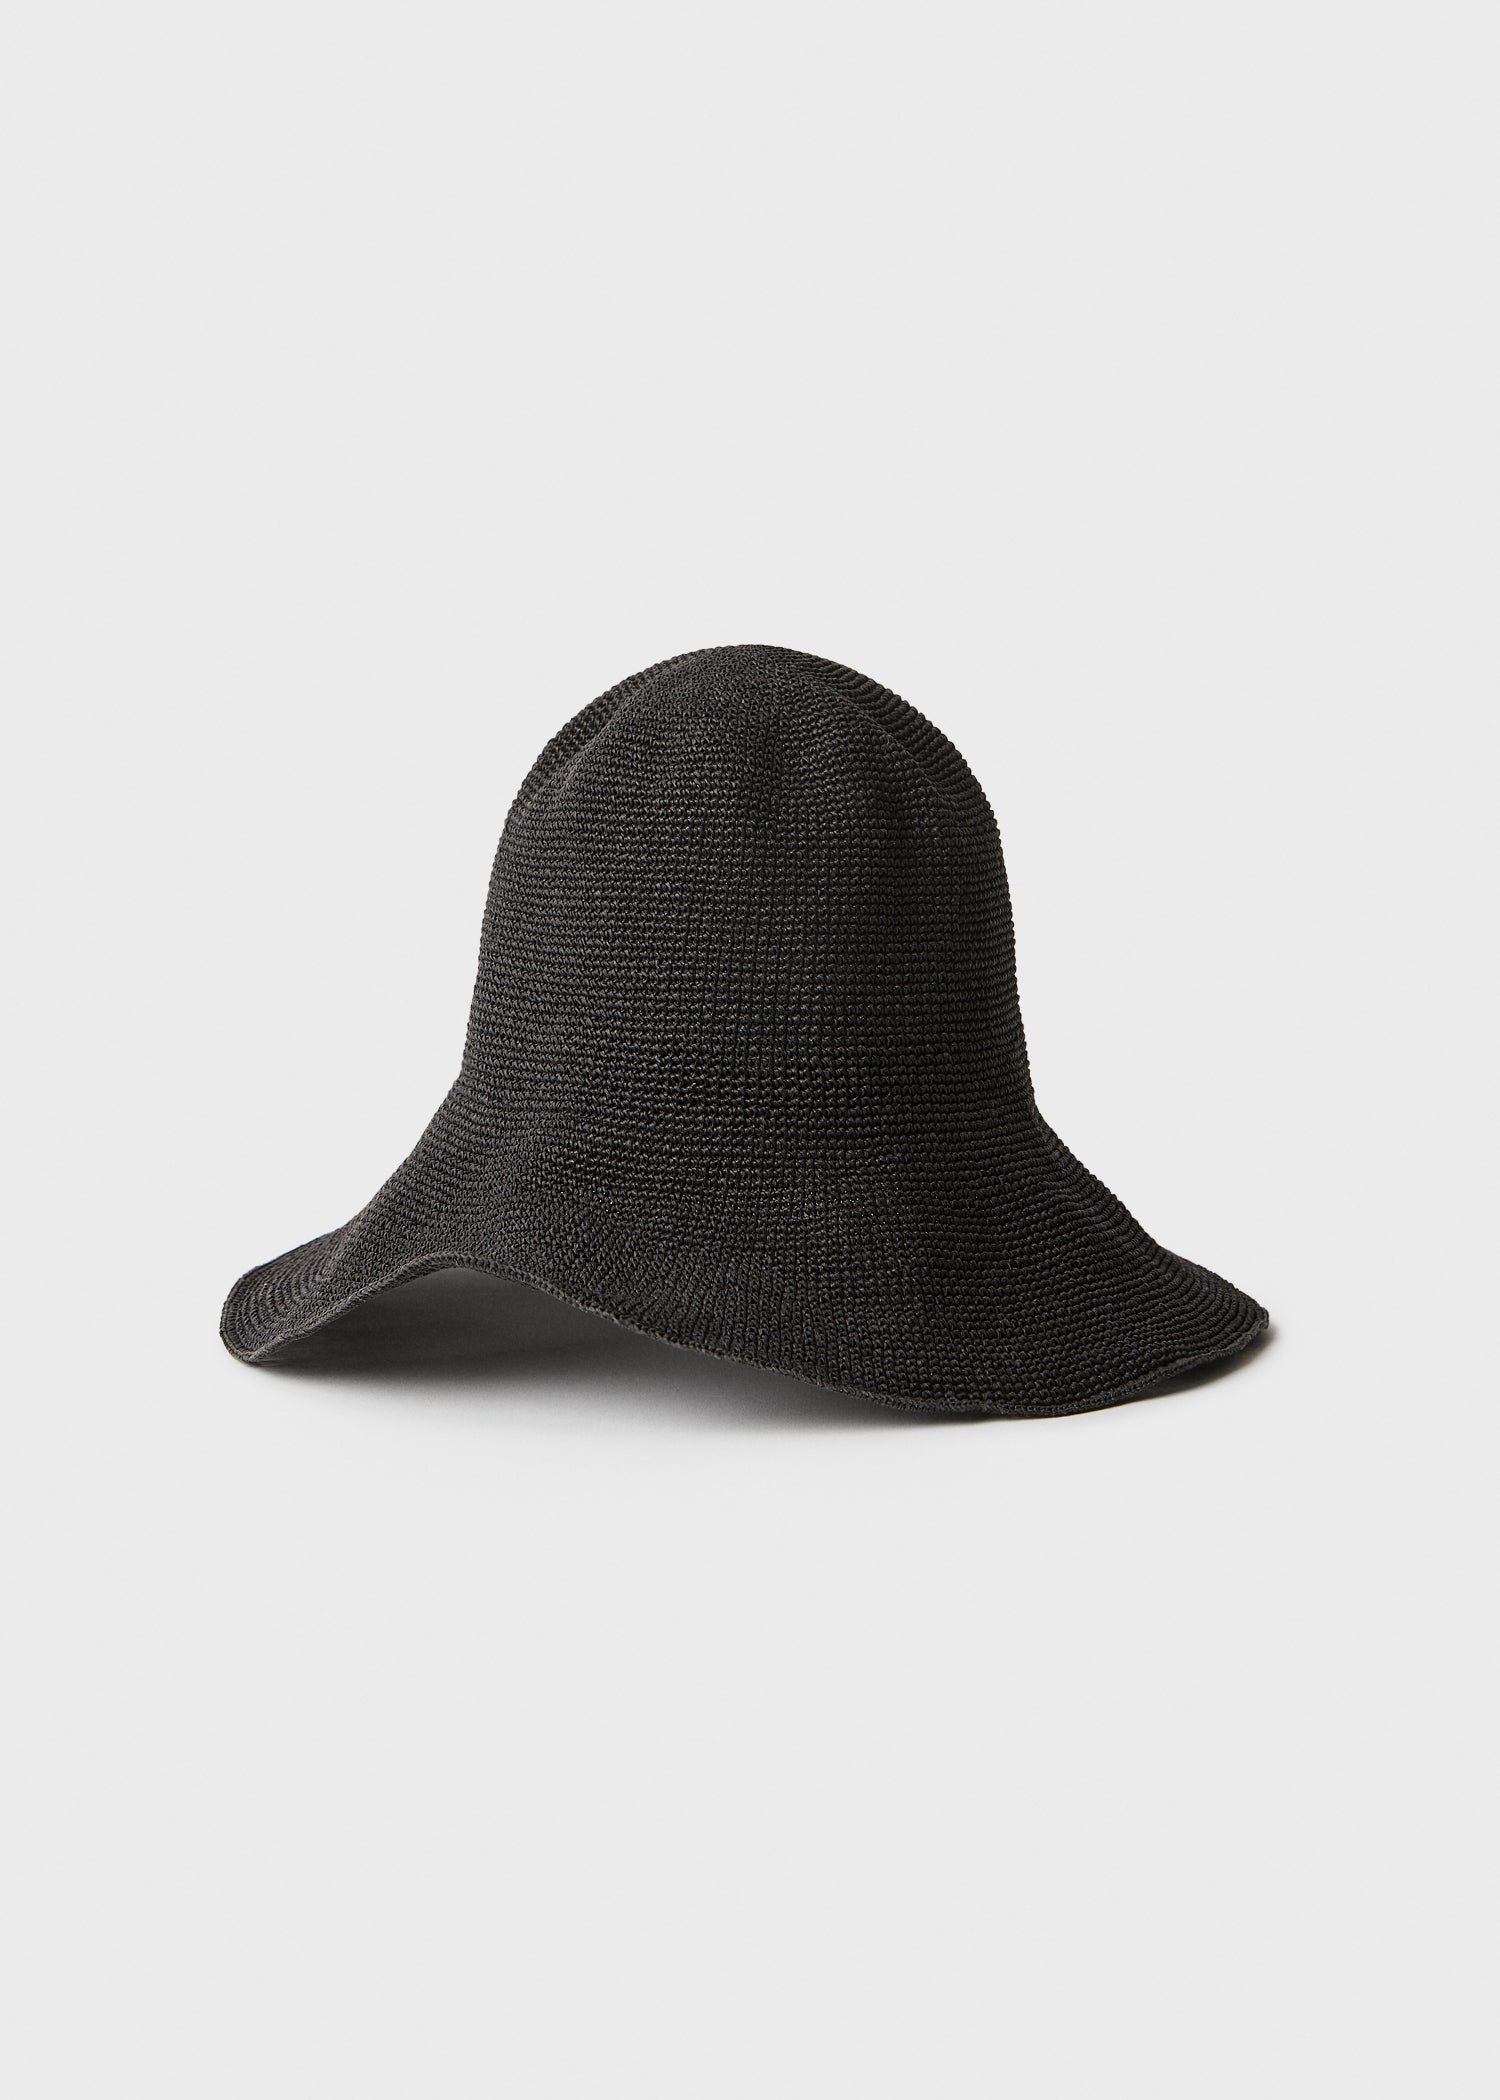 Paper straw hat black - 5